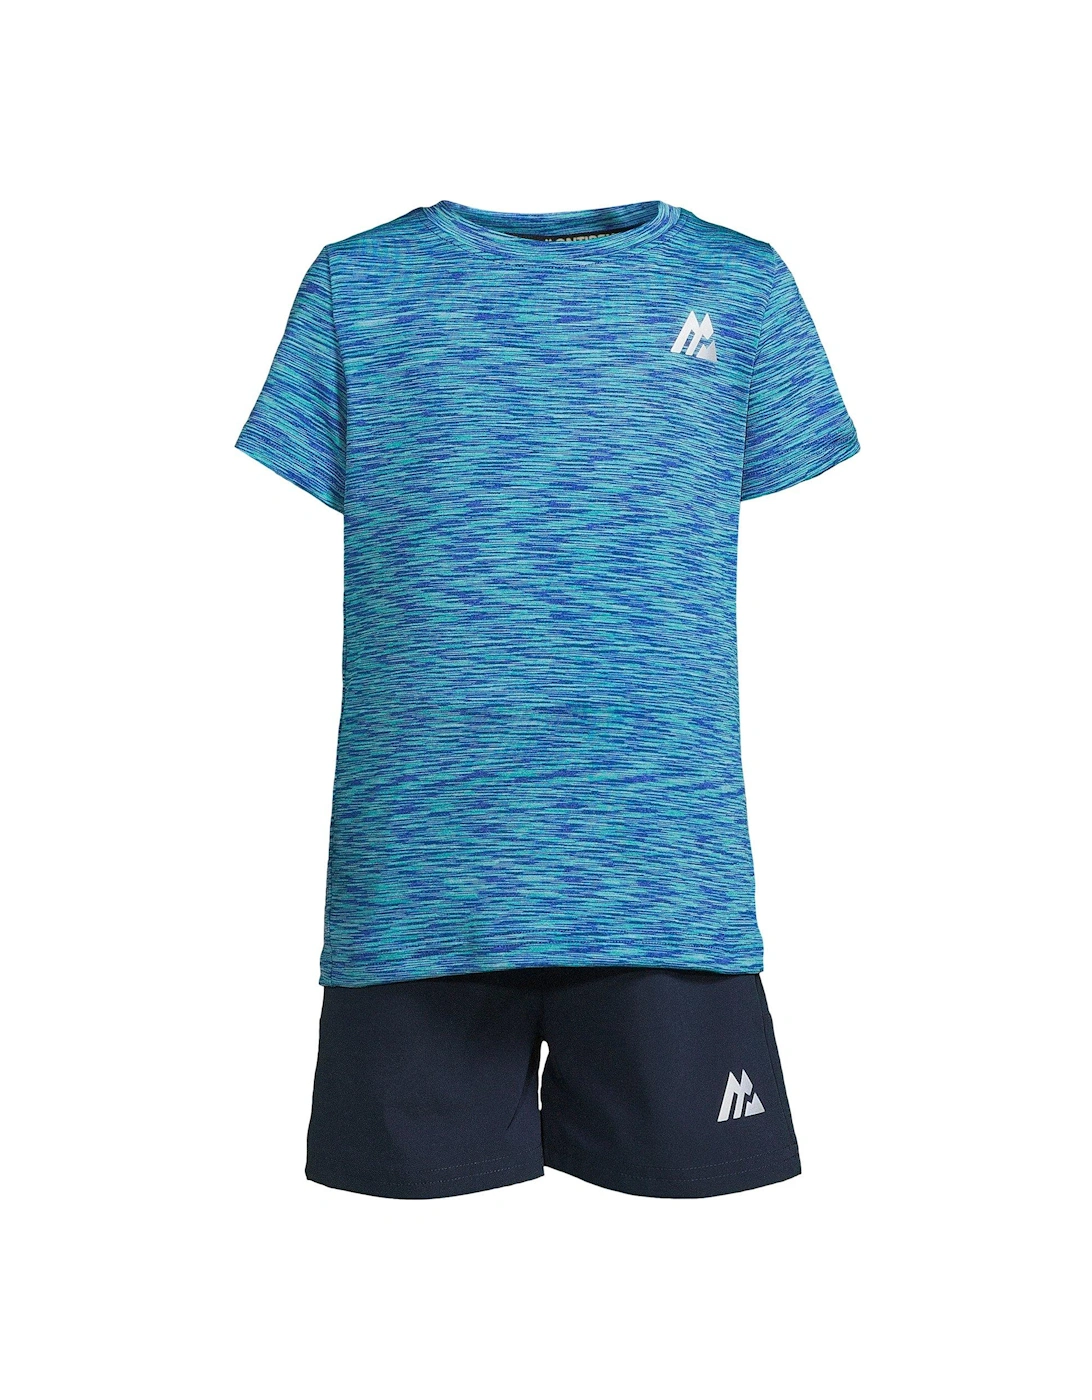 Infants Trail Short Sleeve T-Shirt and Shorts Set - Blue